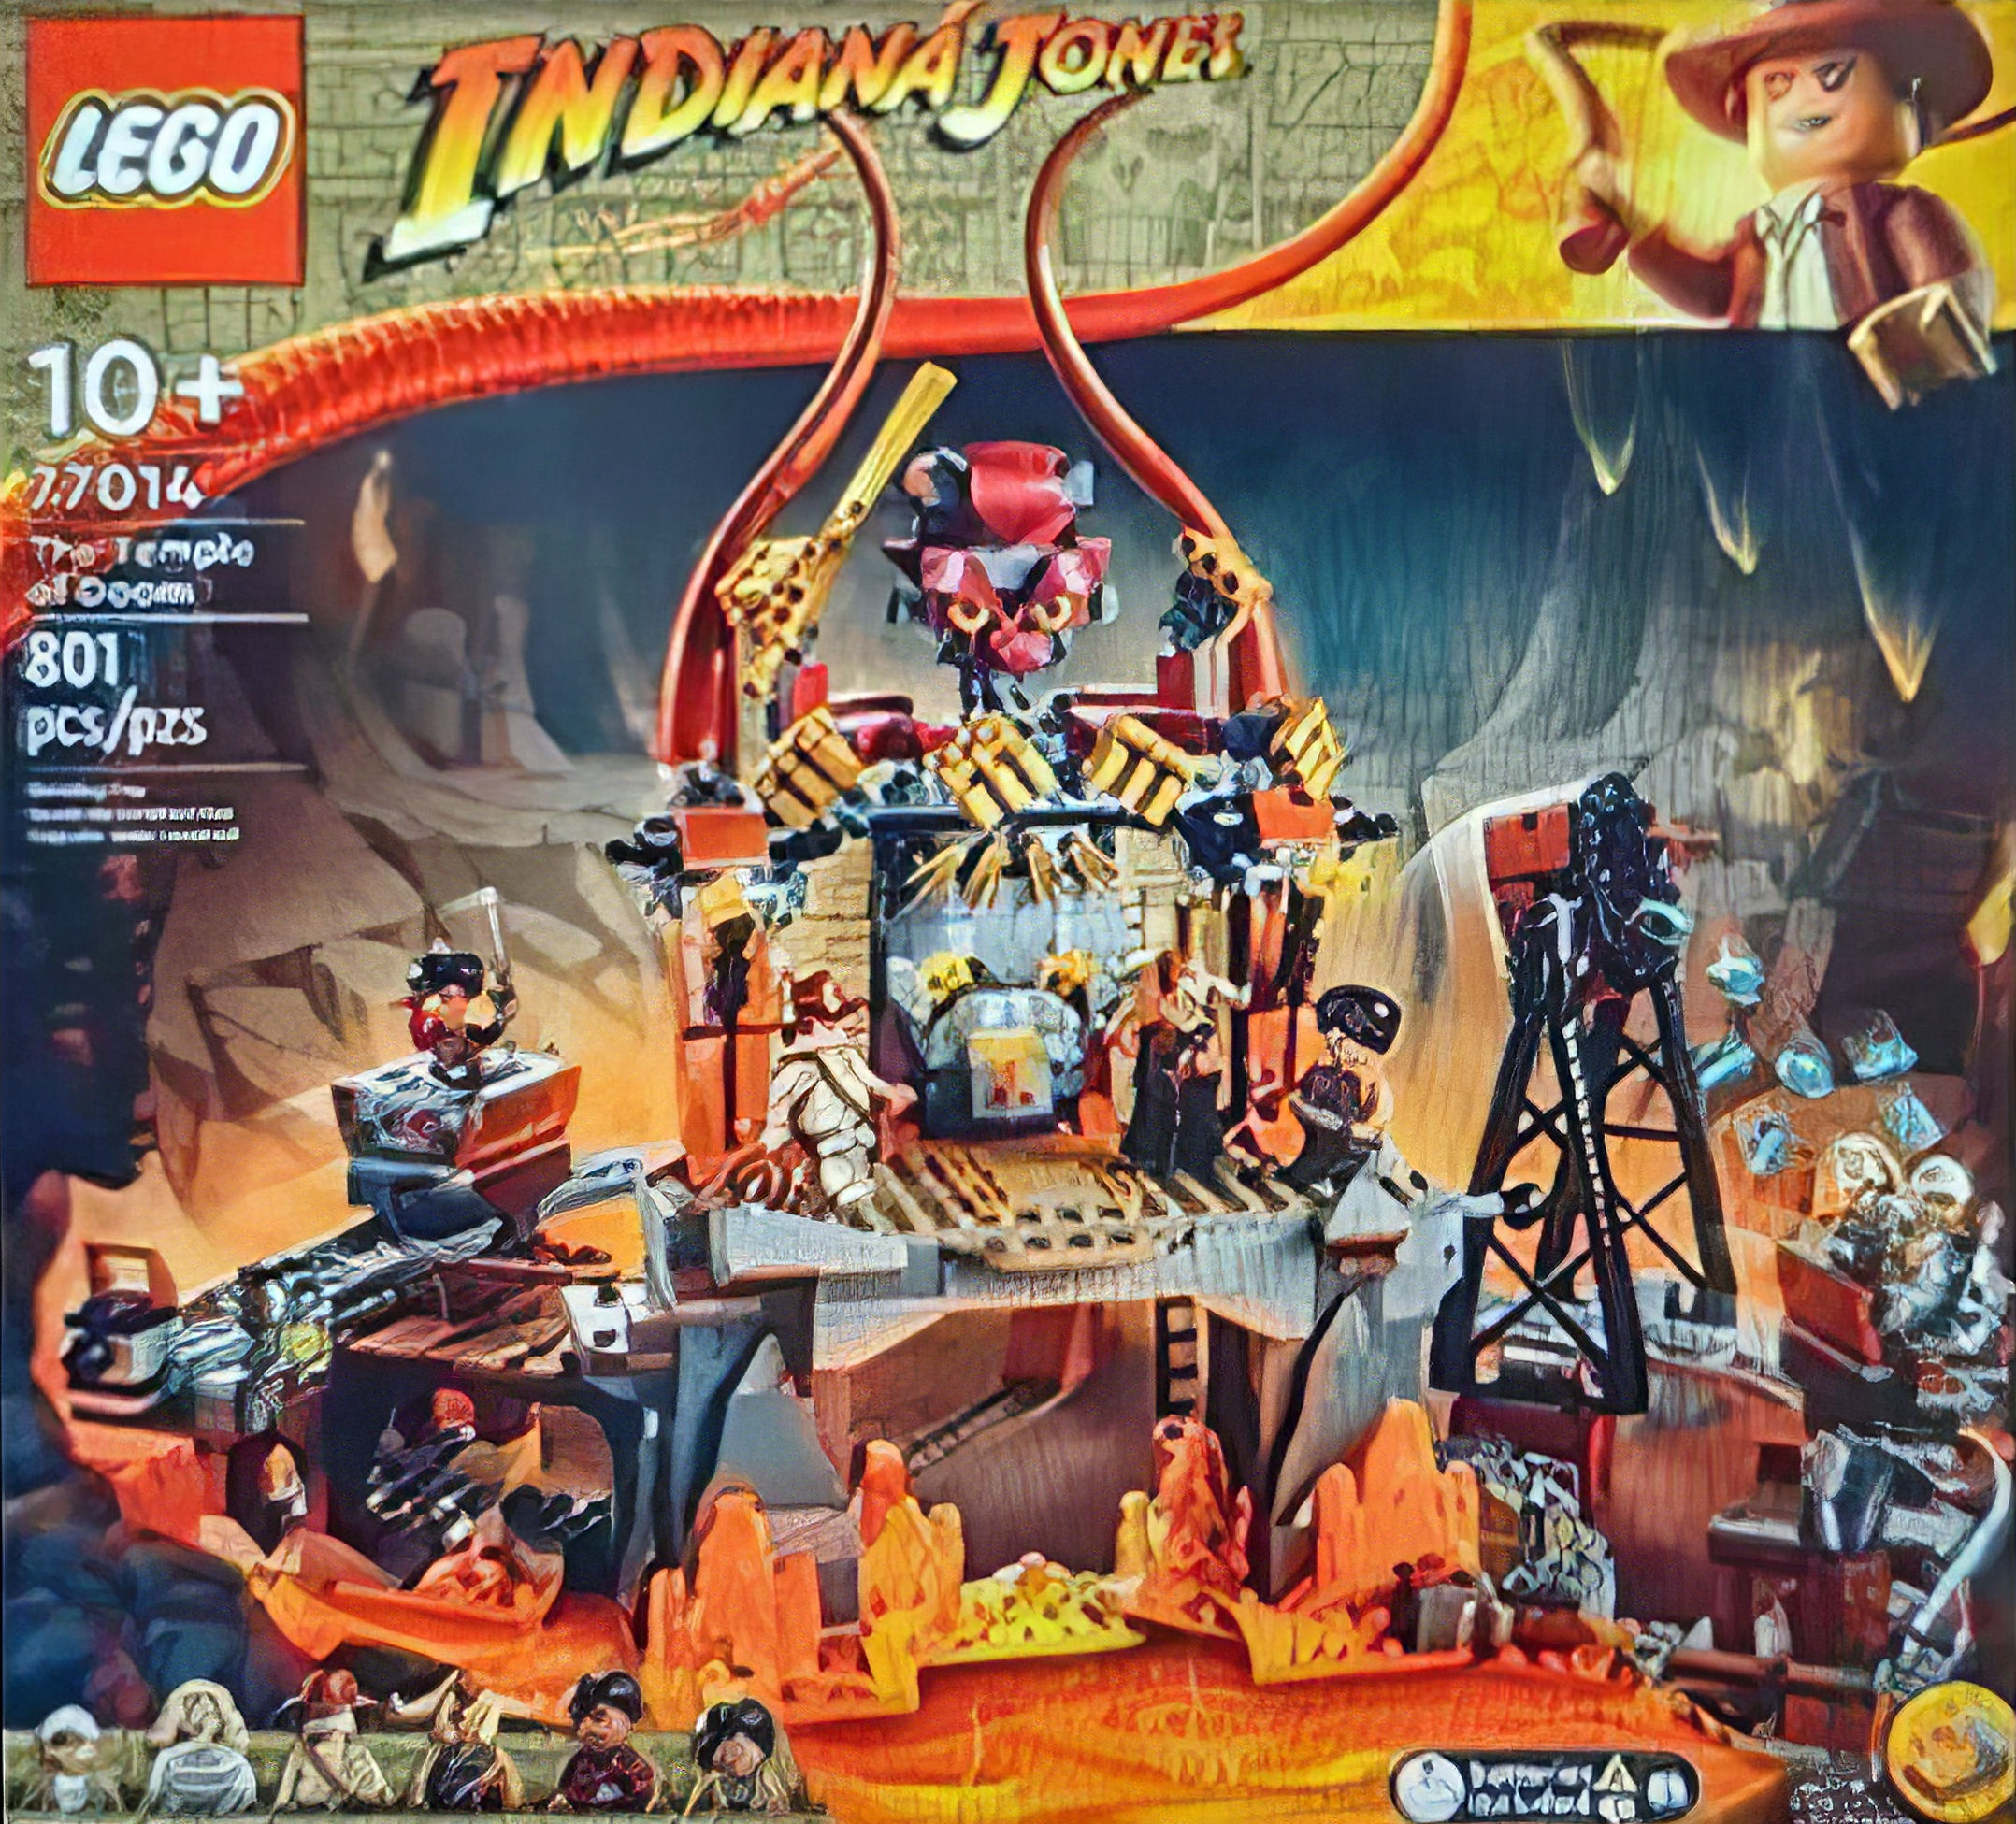 LEGO Indiana Jones 77014 The Temple of Doom